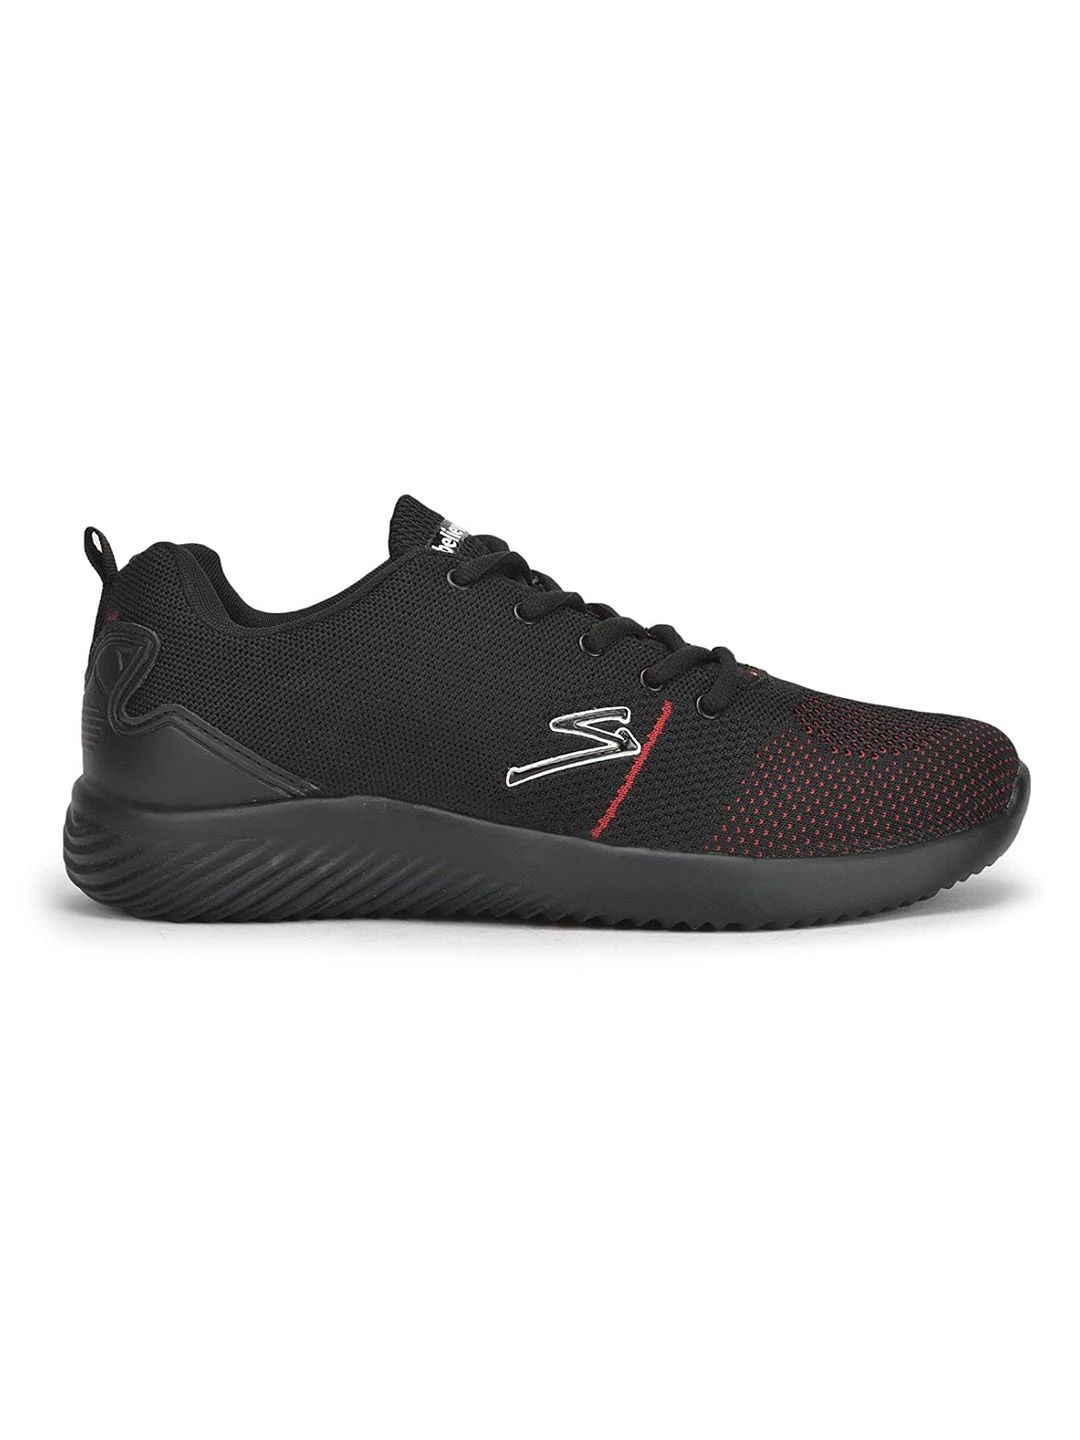 Buy Men Calceus Black Sports Shoes From Fancode Shop.